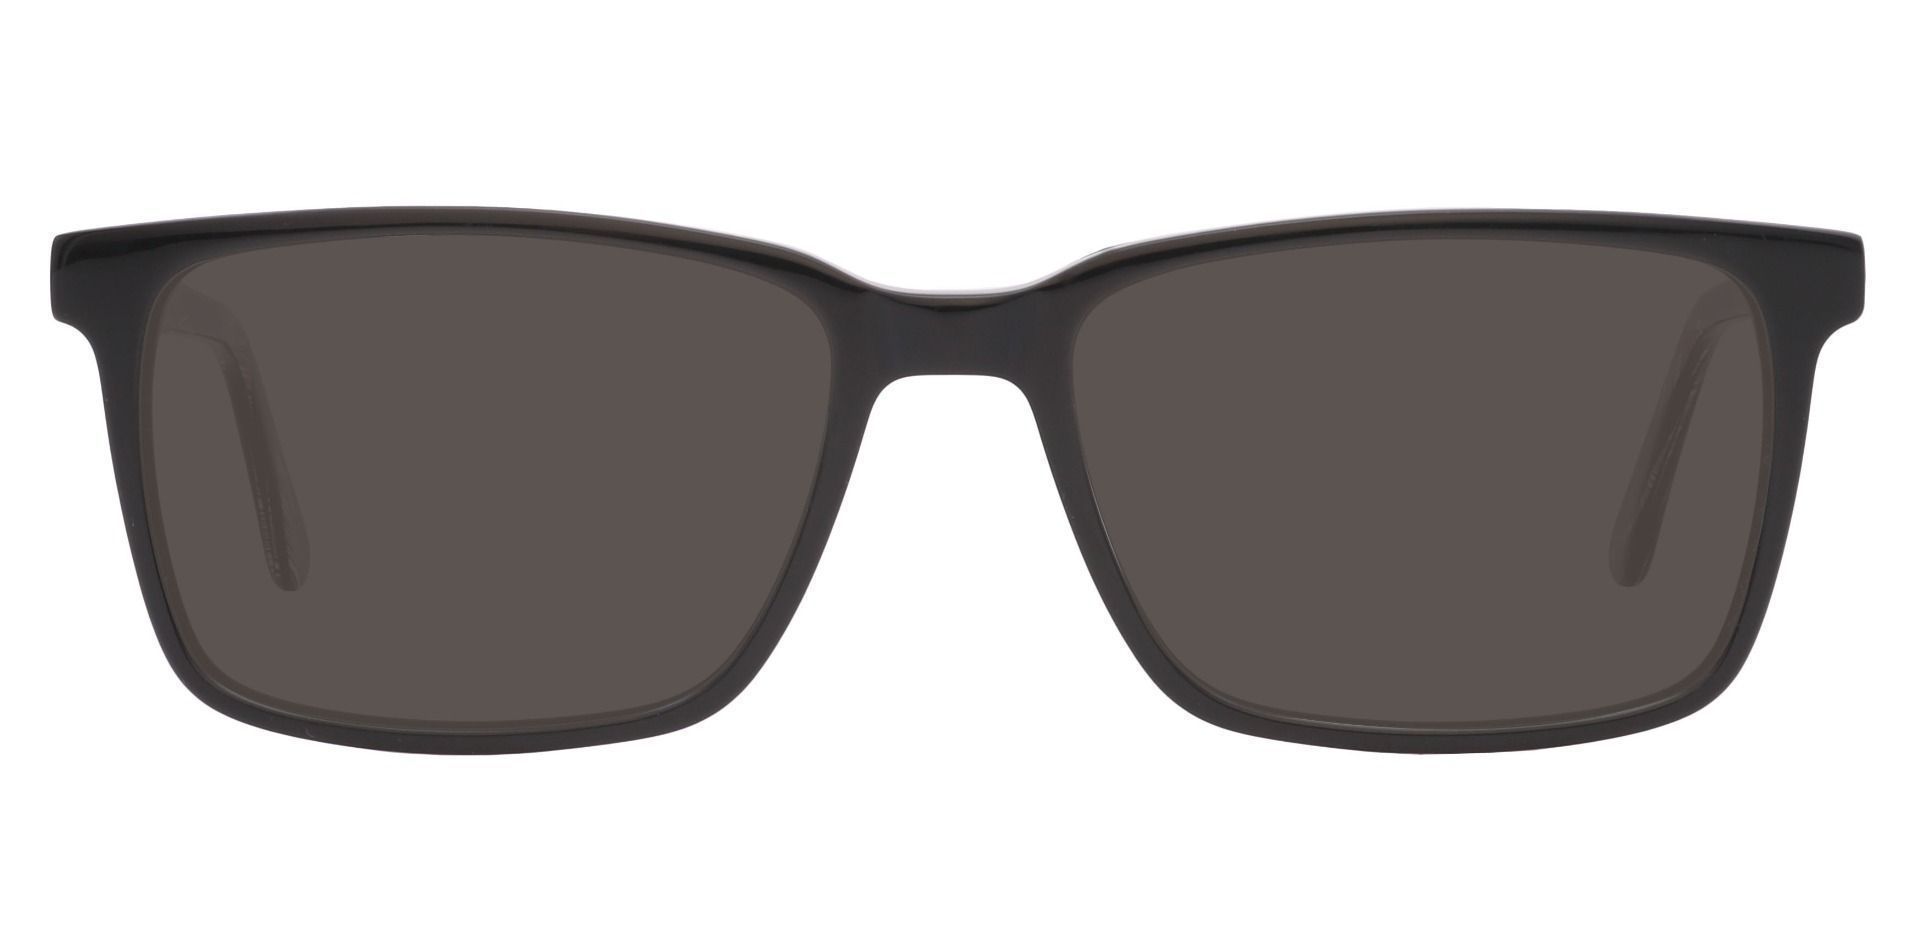 Venice Rectangle Progressive Sunglasses - Black Frame With Gray Lenses